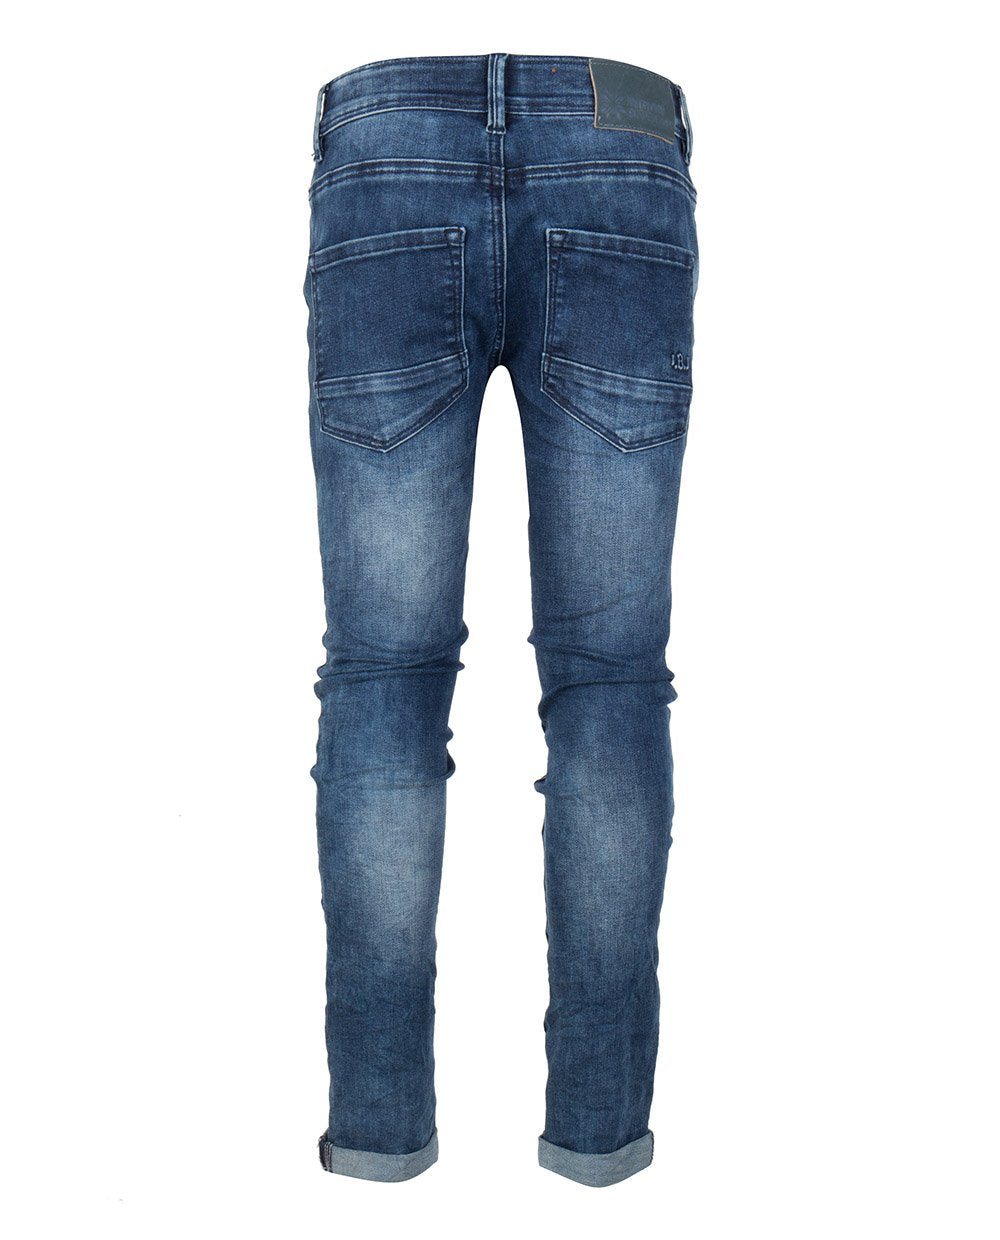 Jongens BLUE ANDY FLEX SKINNY FIT NOOS van Indian Blue Jeans in de kleur Dark Denim in maat 176.